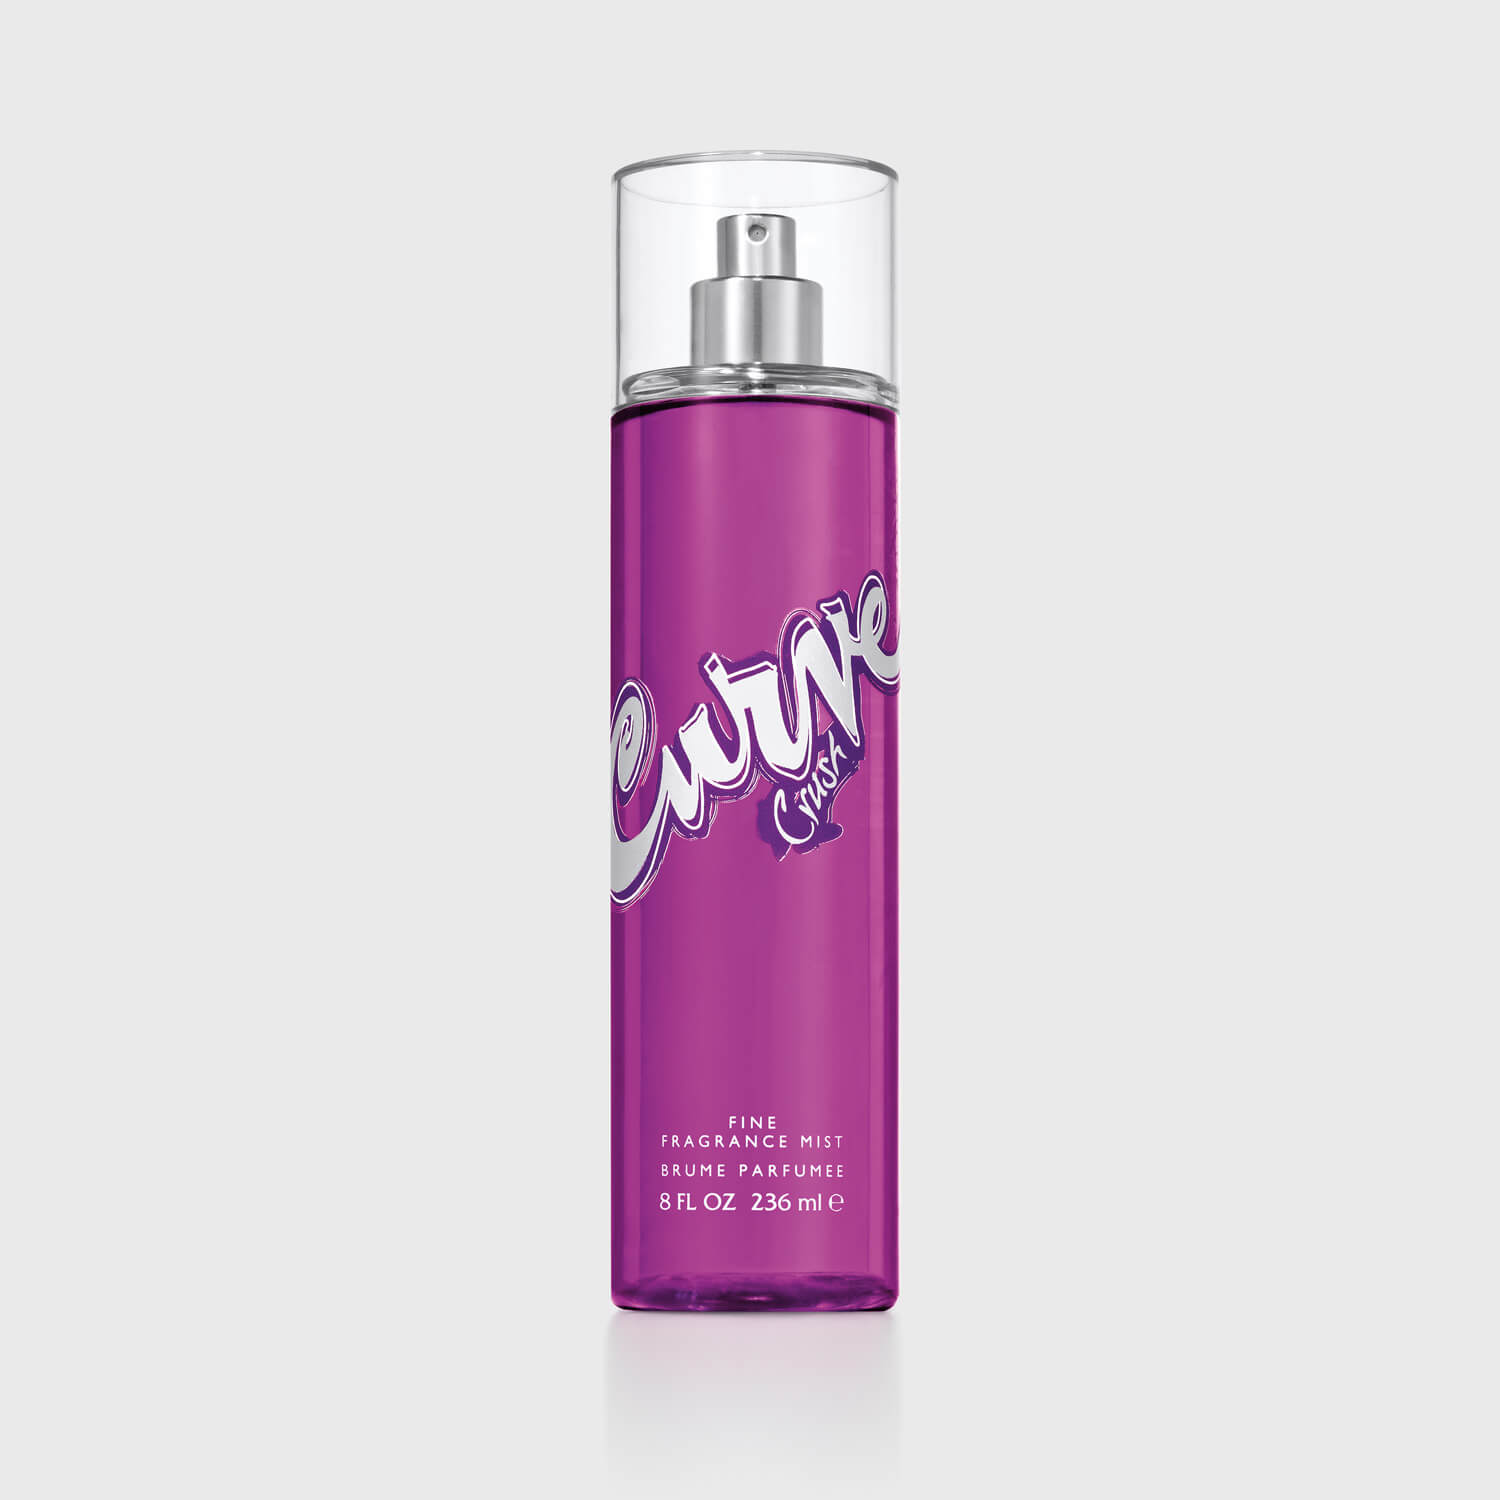 https://www.curvefragrances.com/wp-content/uploads/2019/09/curve-crush-fragrance-for-women-body-mist-8-fl-oz.jpg